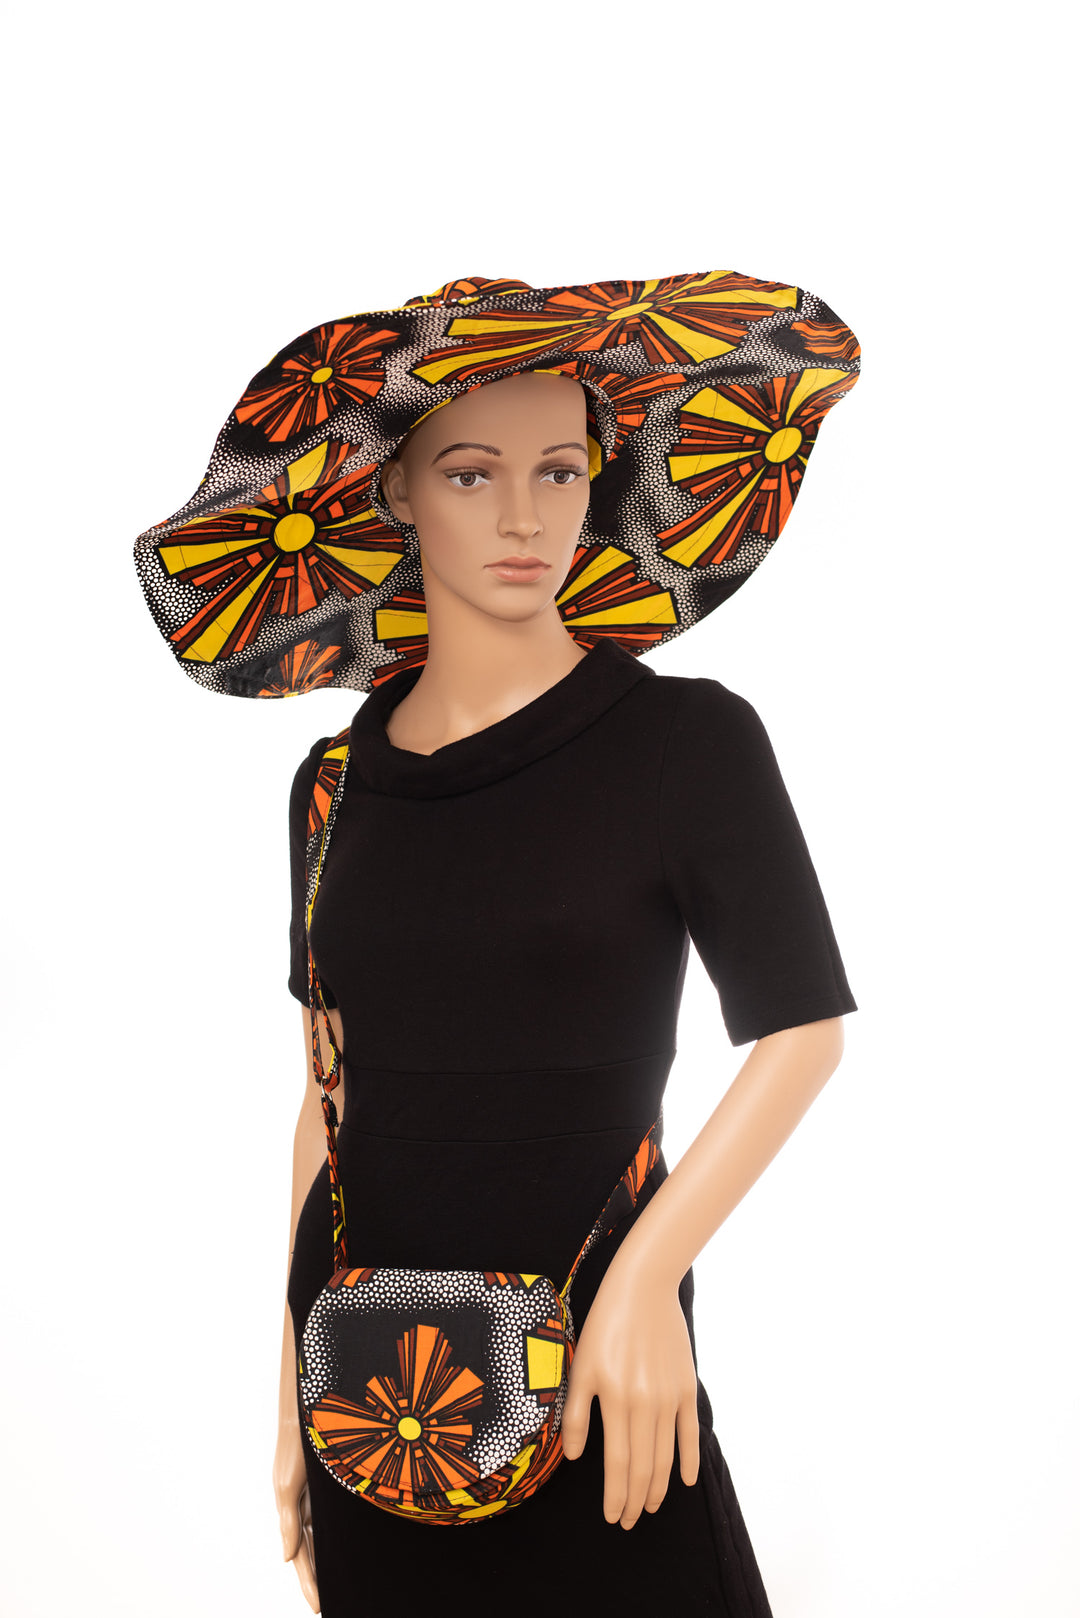 Women's Sun Protective Summer Hat Wide Brim with matching crossbody Bag Black/Yellow/Orange Colour